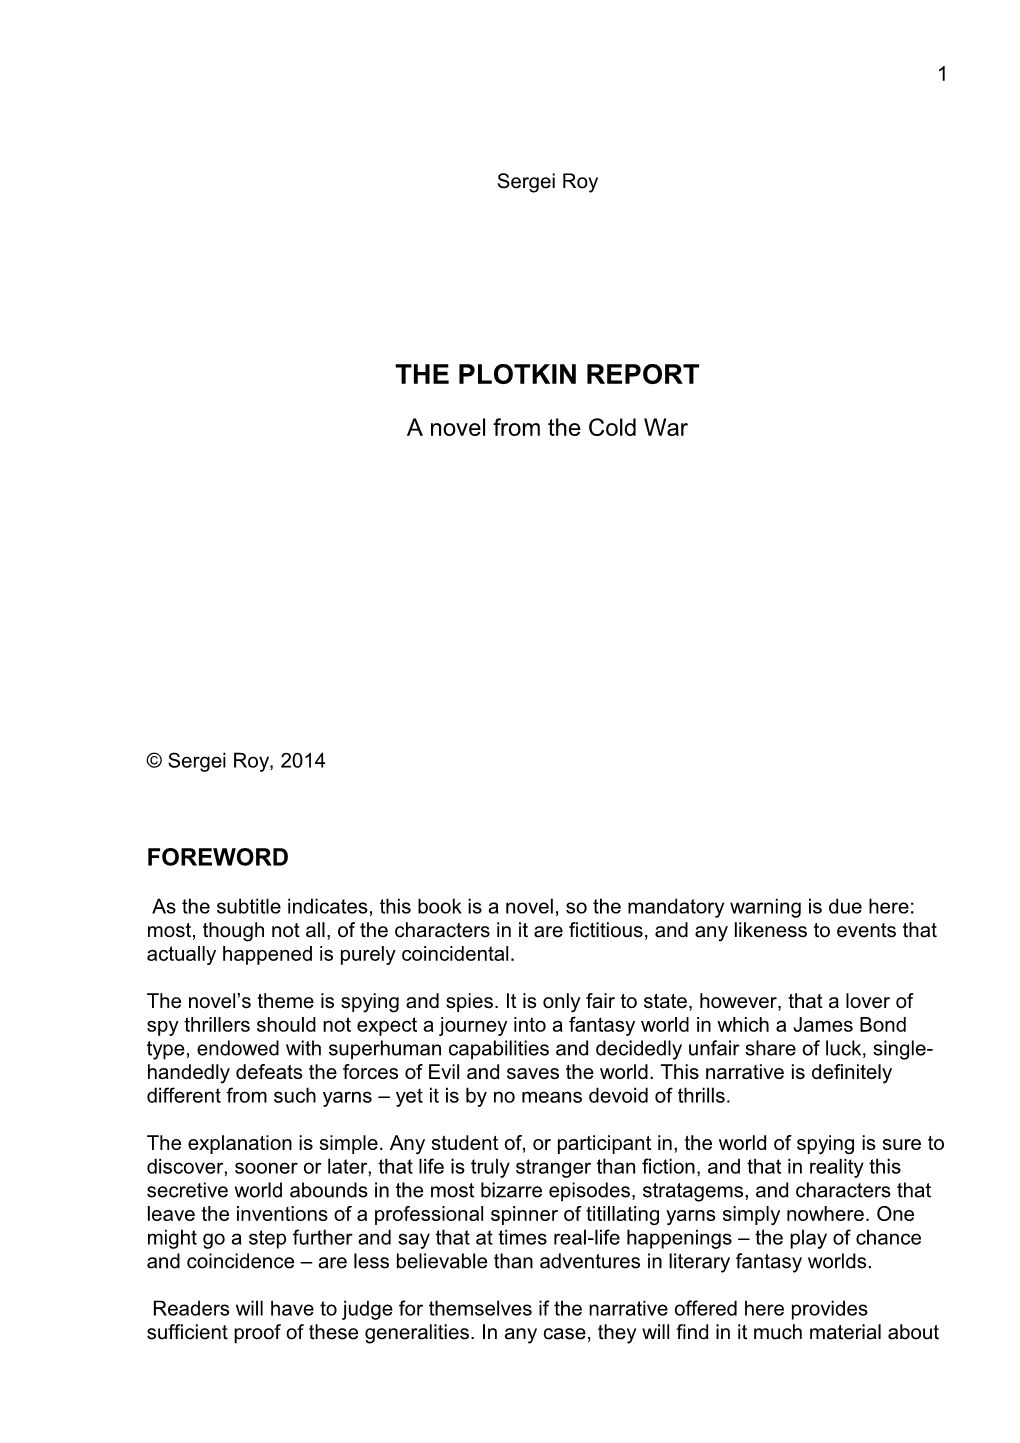 The Plotkin Report